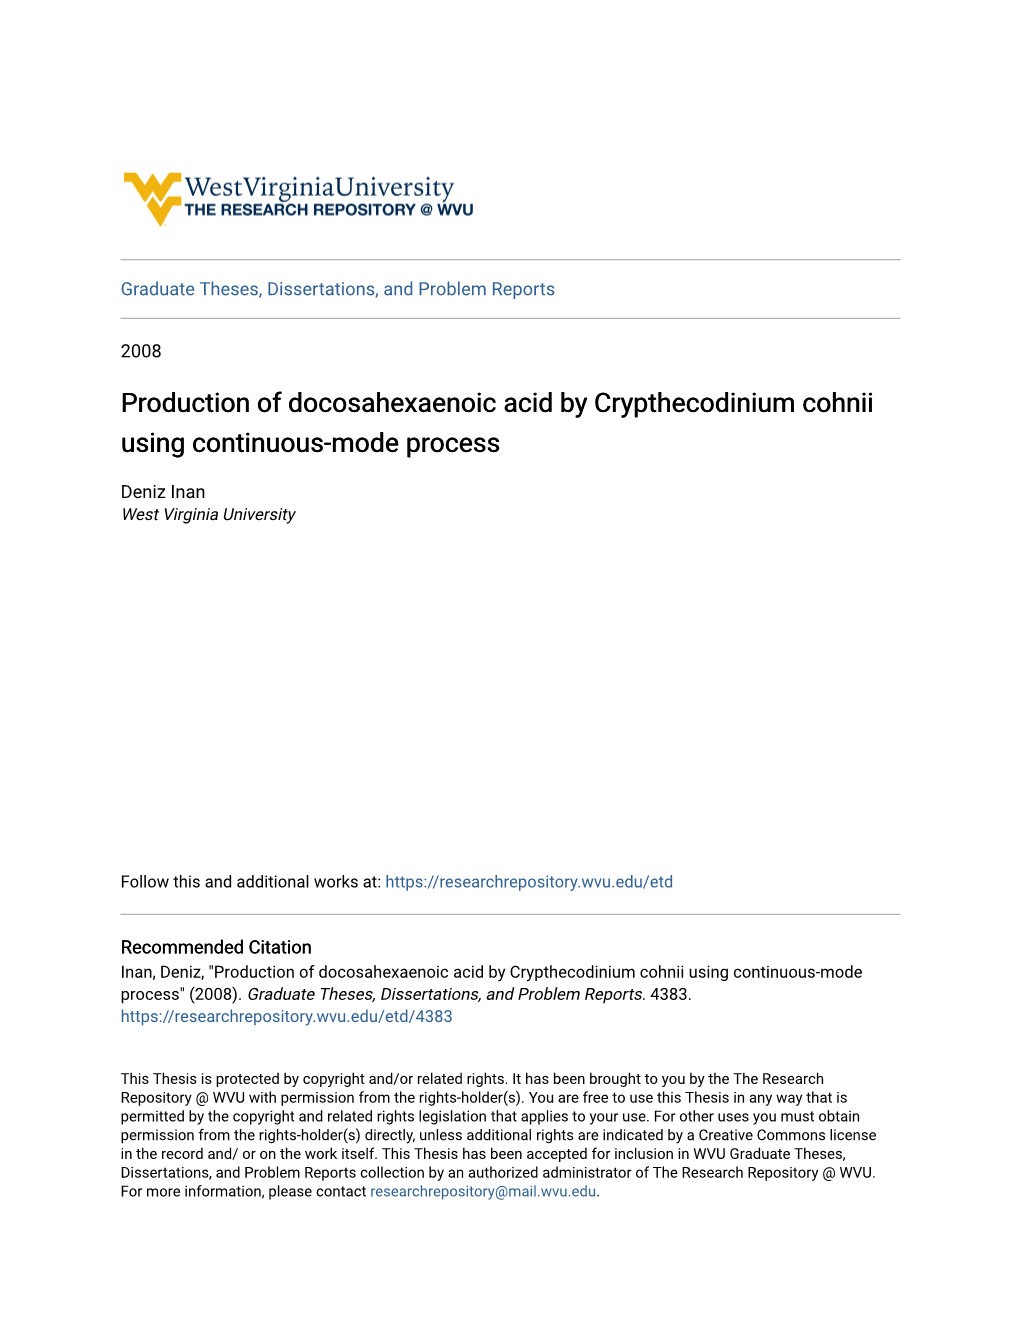 Production of Docosahexaenoic Acid by Crypthecodinium Cohnii Using Continuous-Mode Process